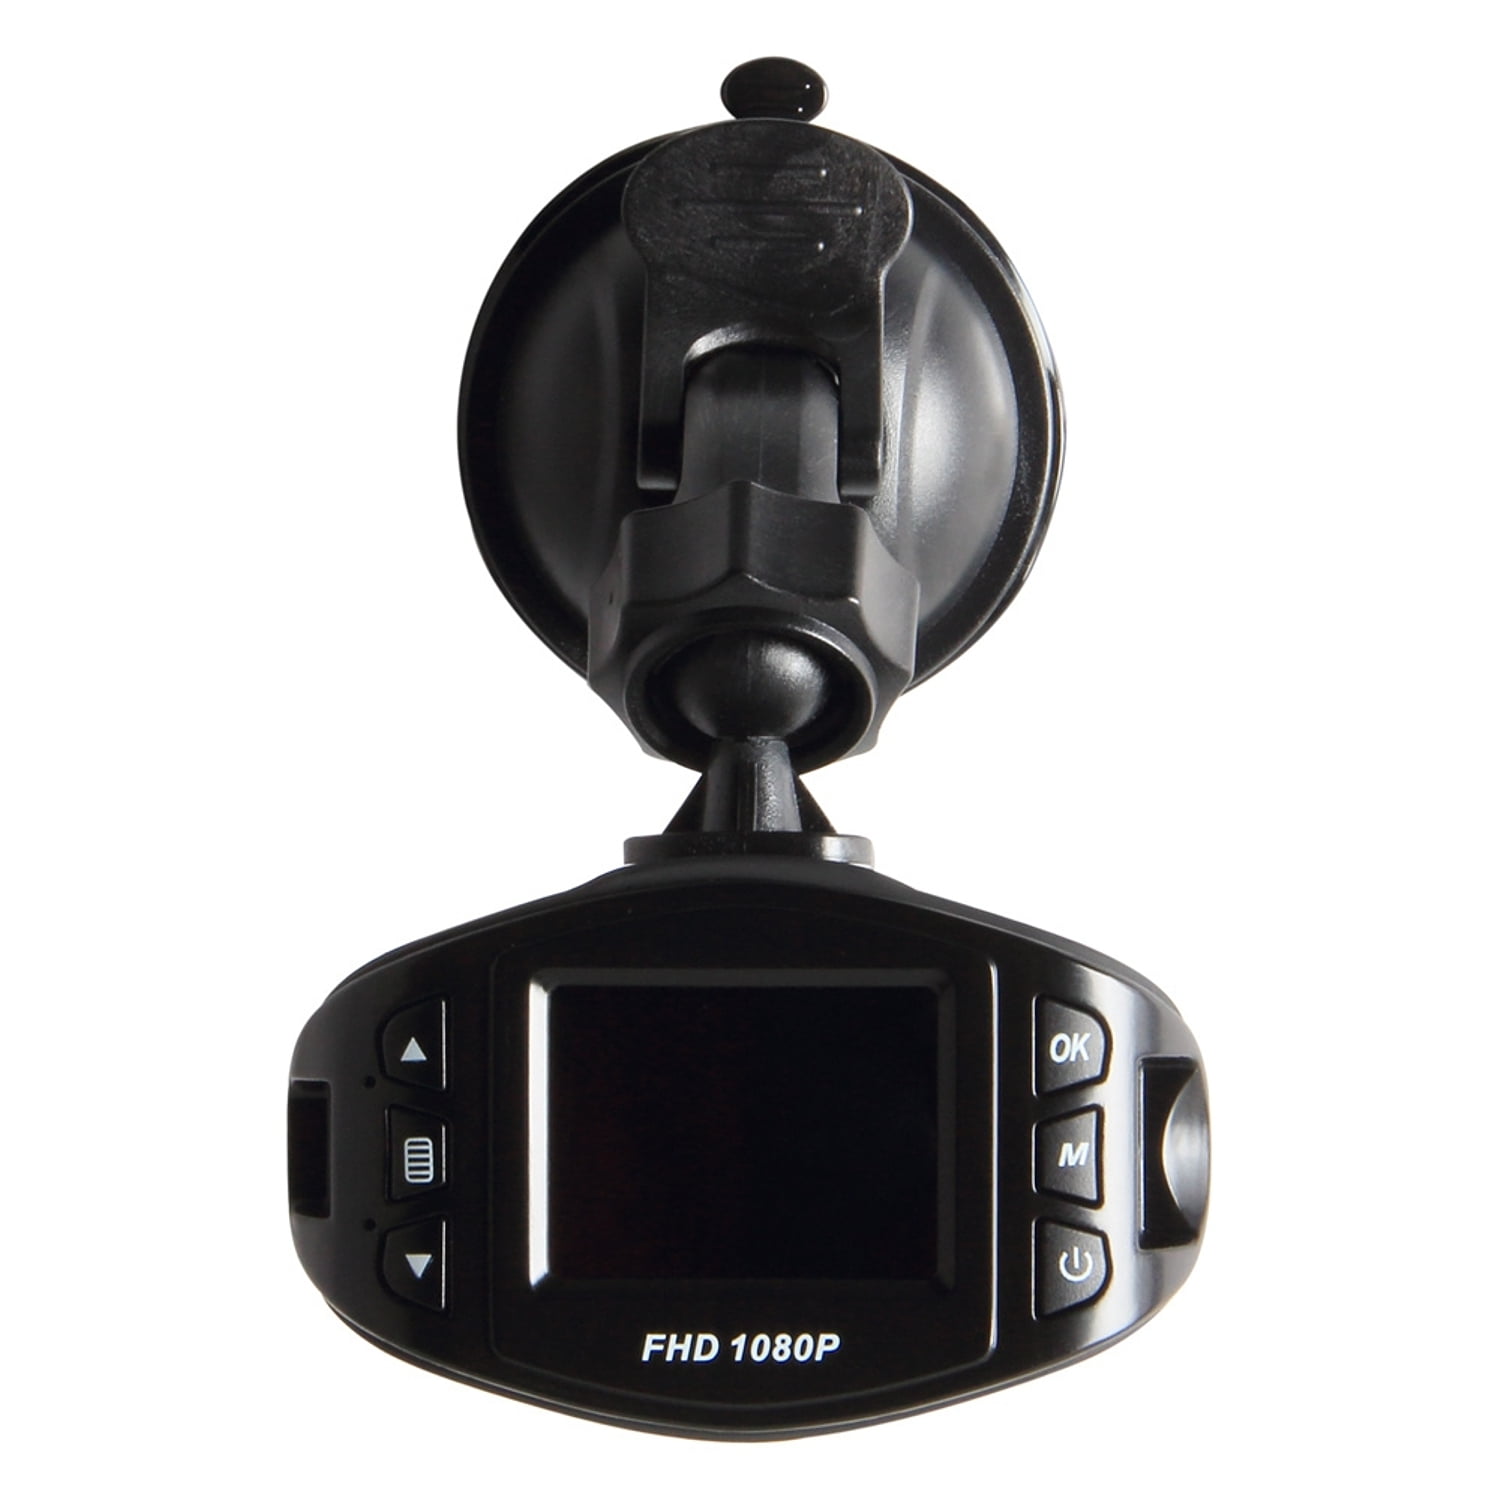 NEXPOW Dash Cam Front and Rear, 1080P Full HD Dash Camera, Dashcam